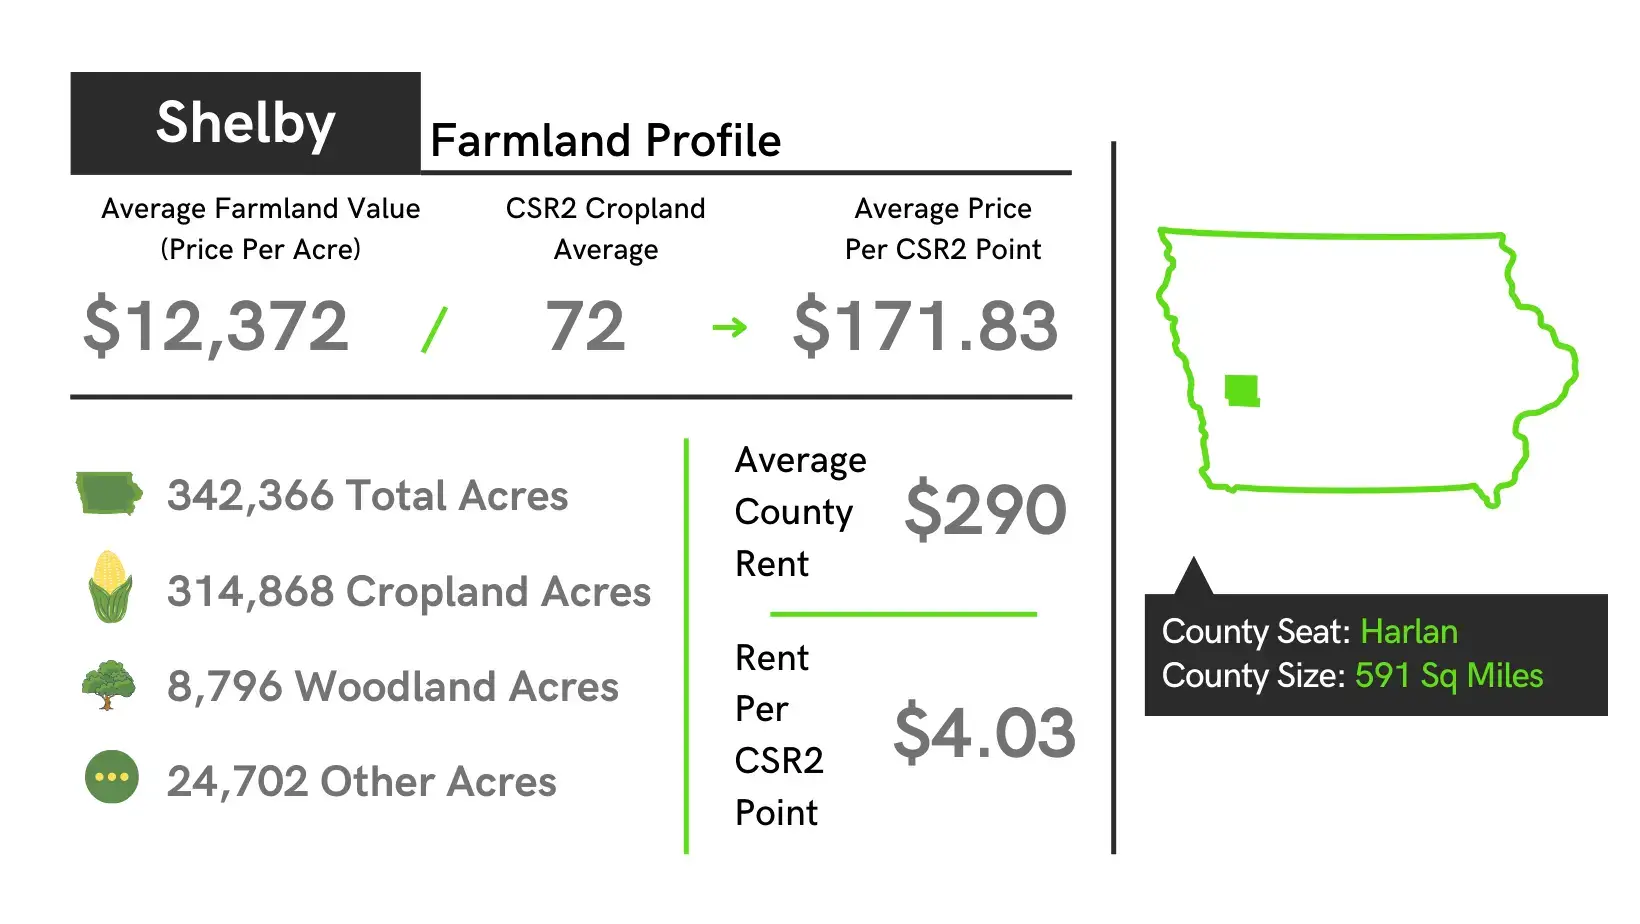 Shelby County Farmland Profile